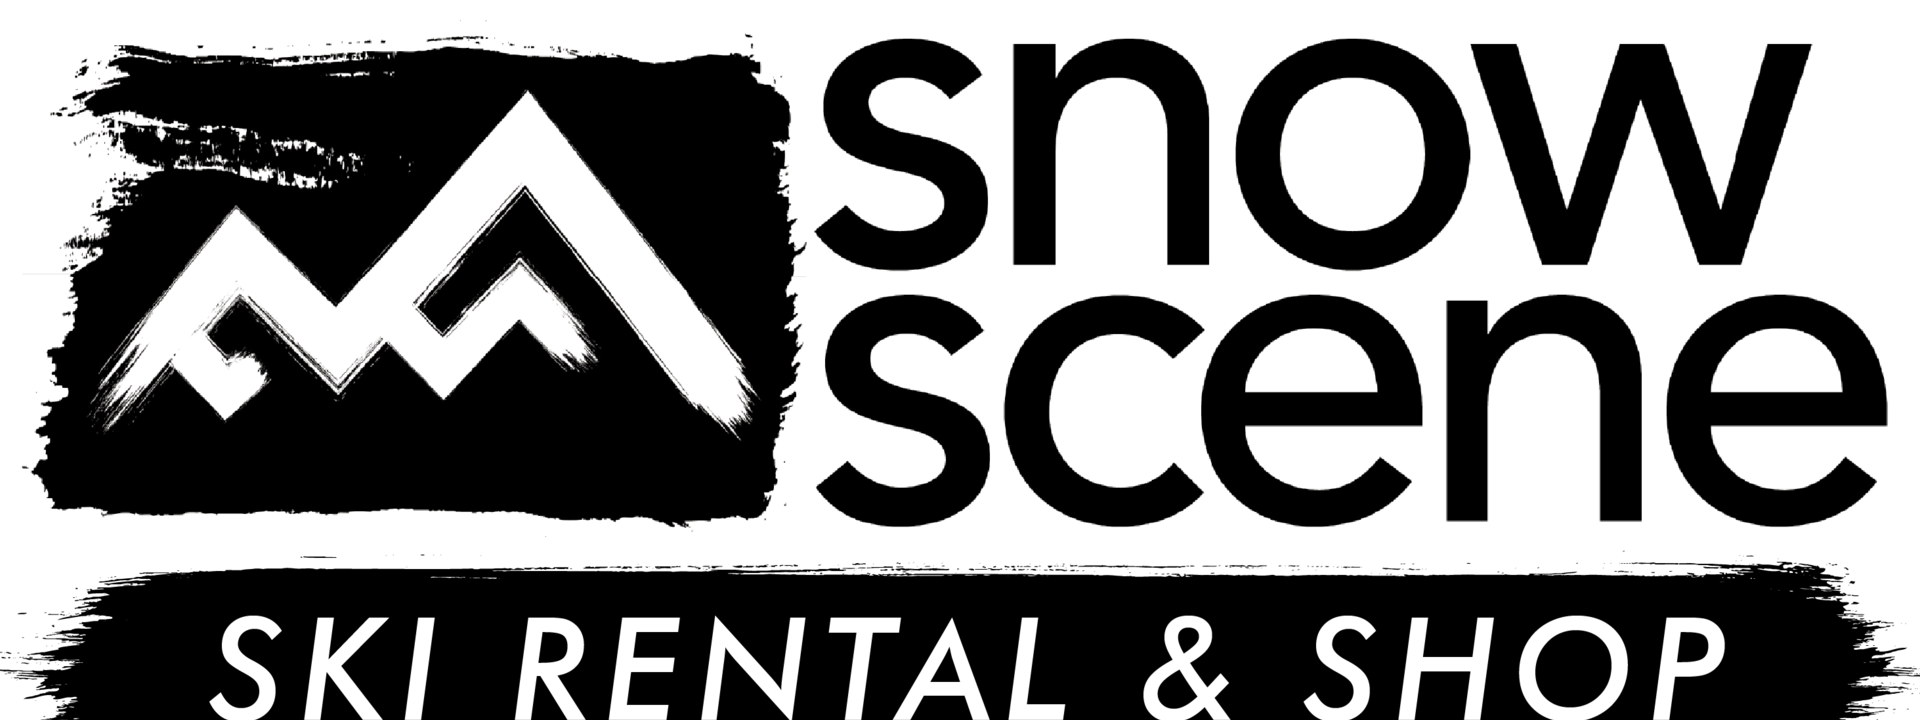 snowscene-logo.png